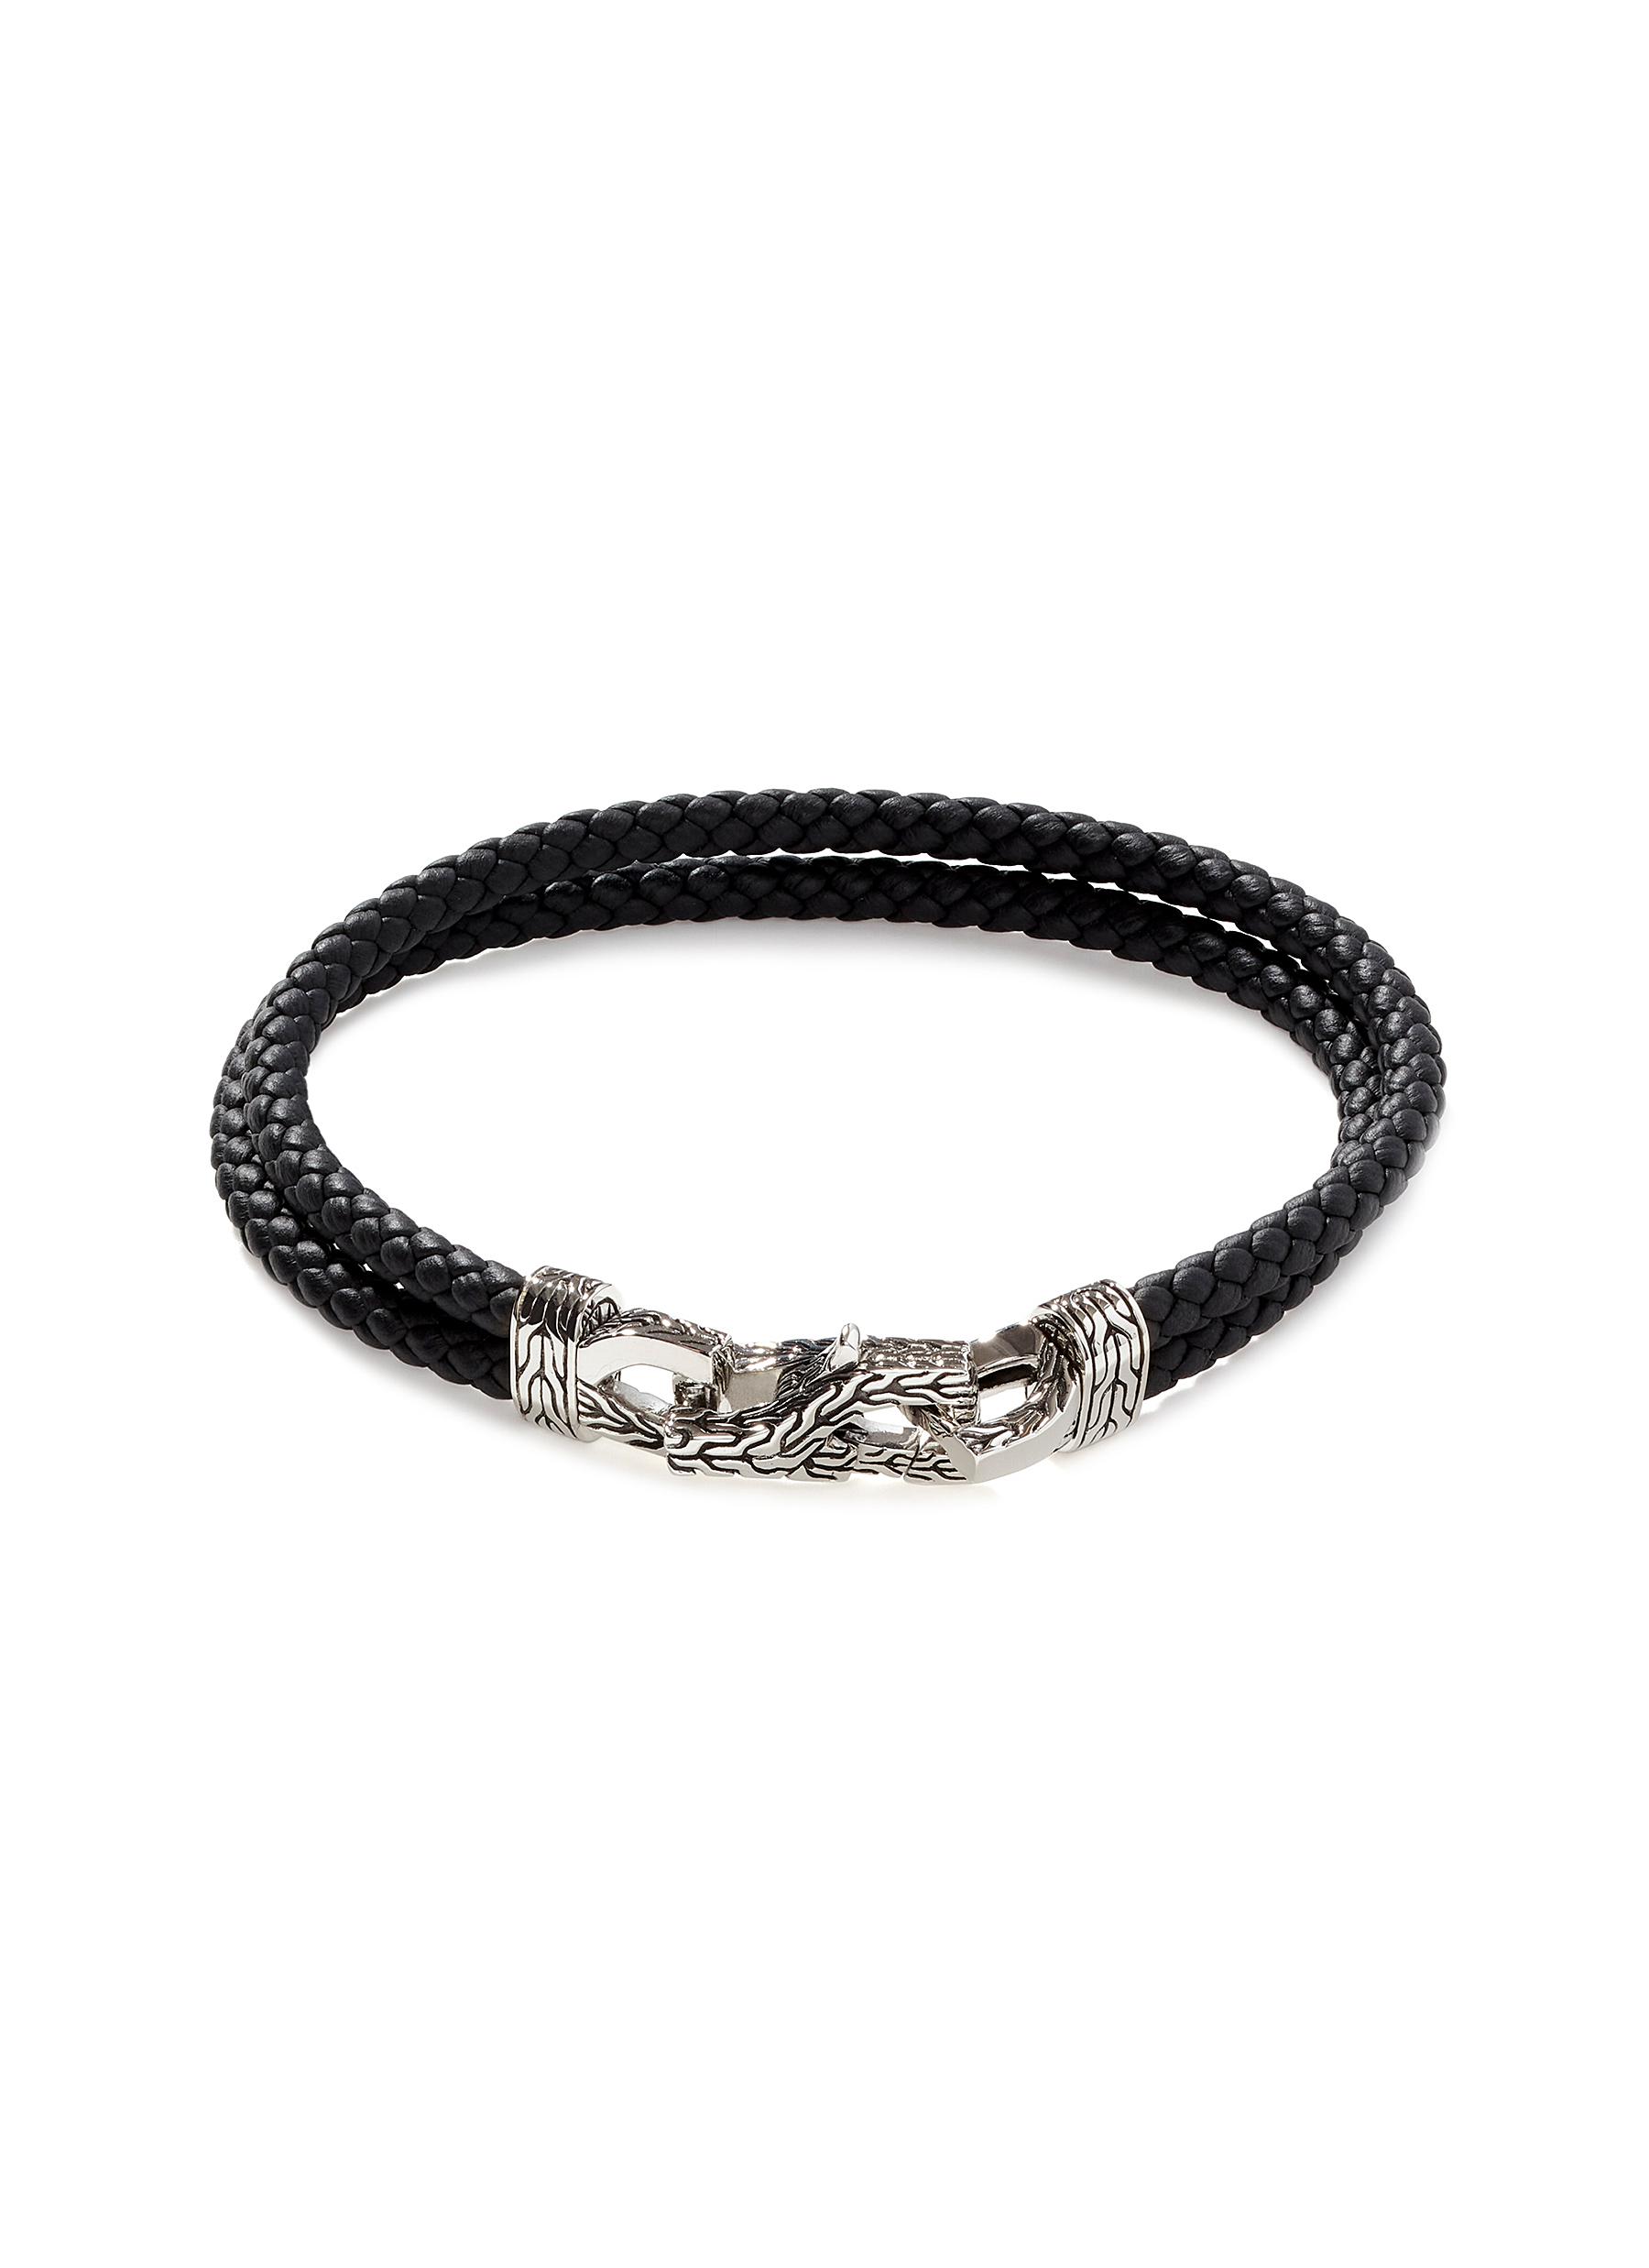 JOHN HARDY ‘Classic Chain' Asli Double Woven Leather Strap Silver Bracelet